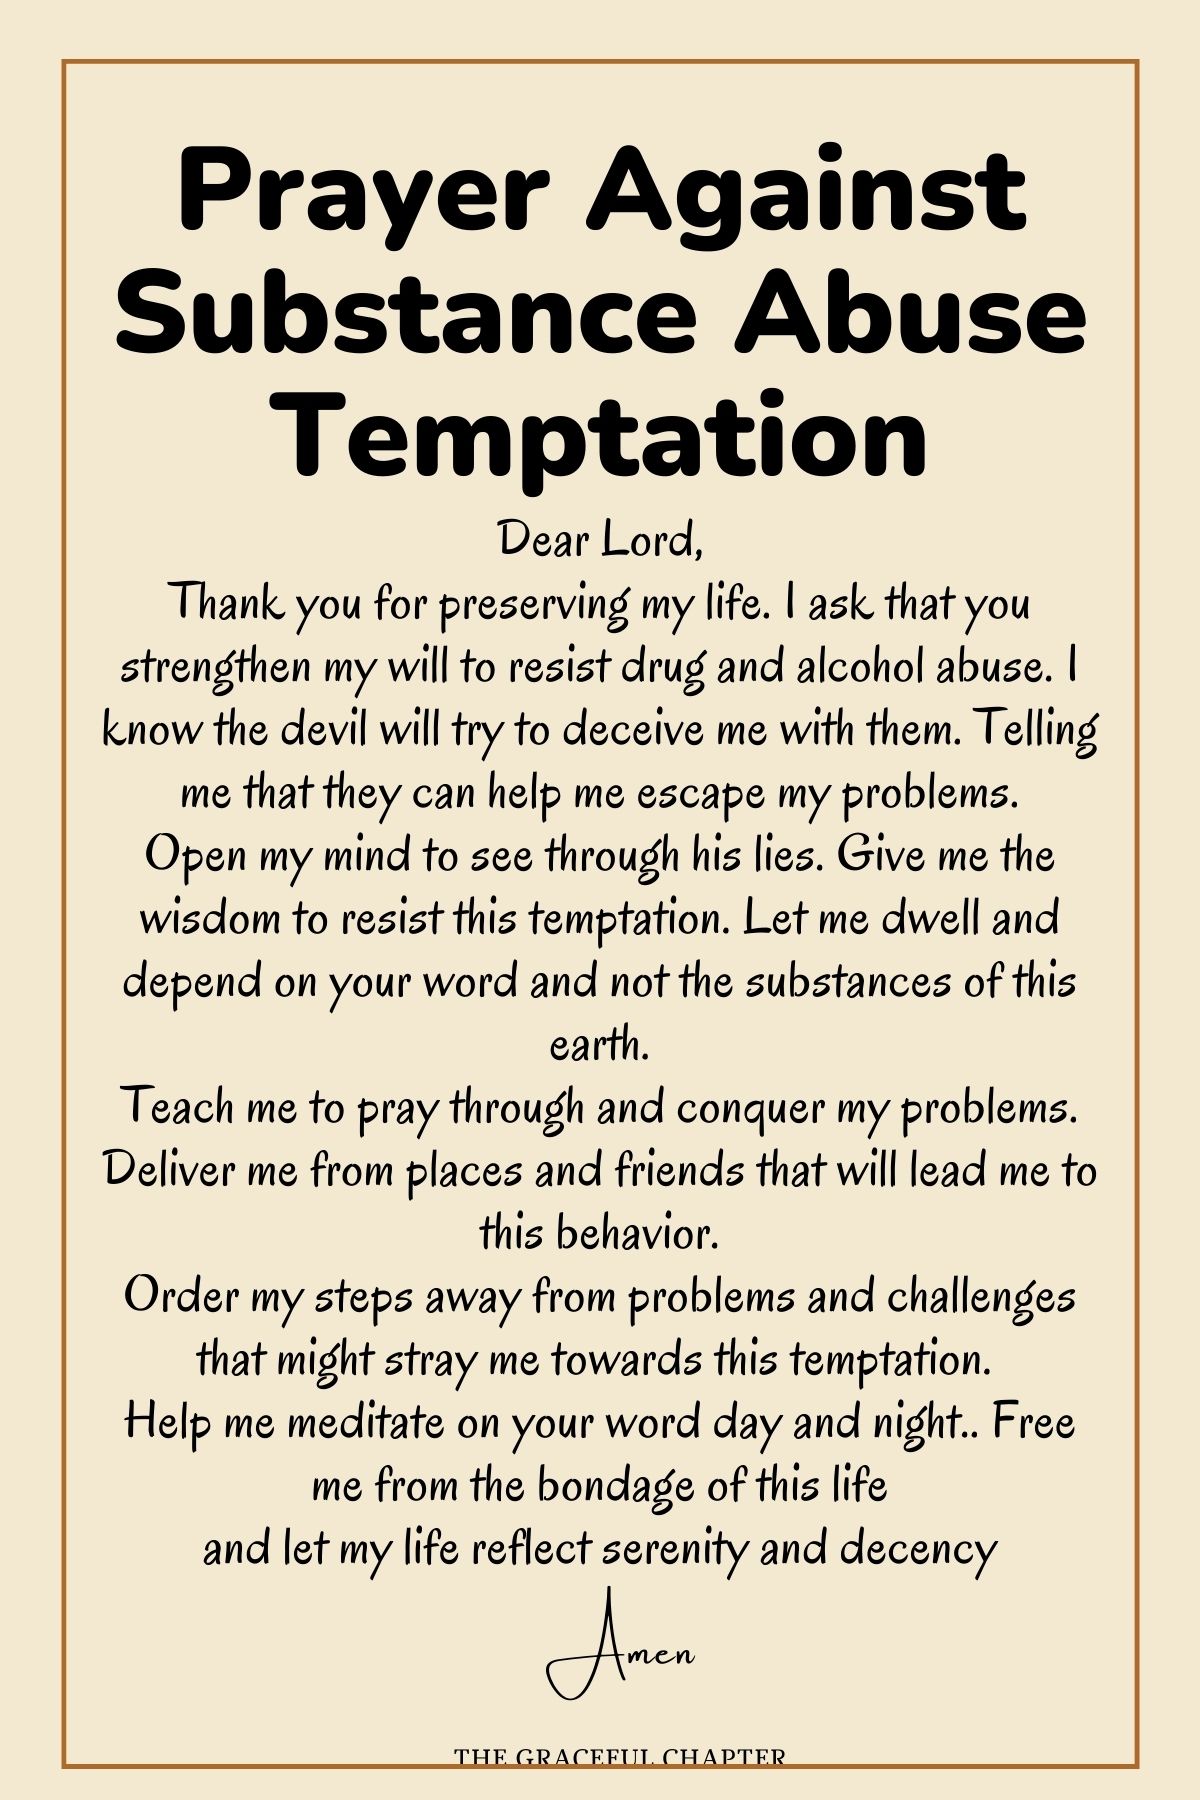 Prayer against substance abuse temptation